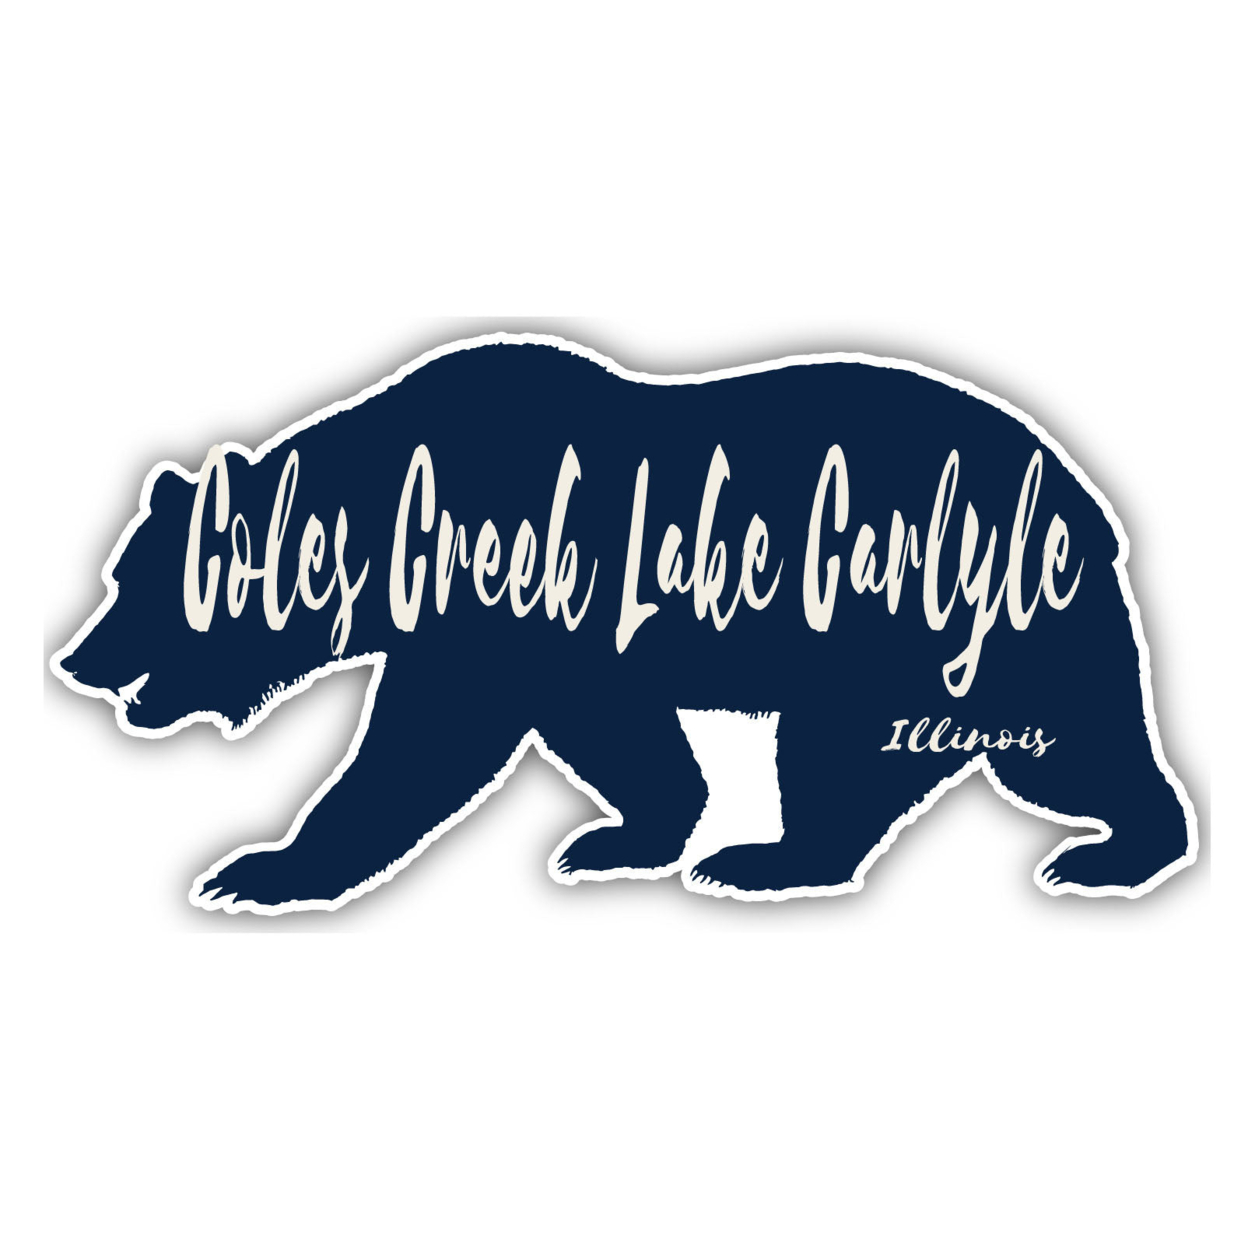 Coles Creek Lake Carlyle Illinois Souvenir Decorative Stickers (Choose Theme And Size) - Single Unit, 12-Inch, Bear